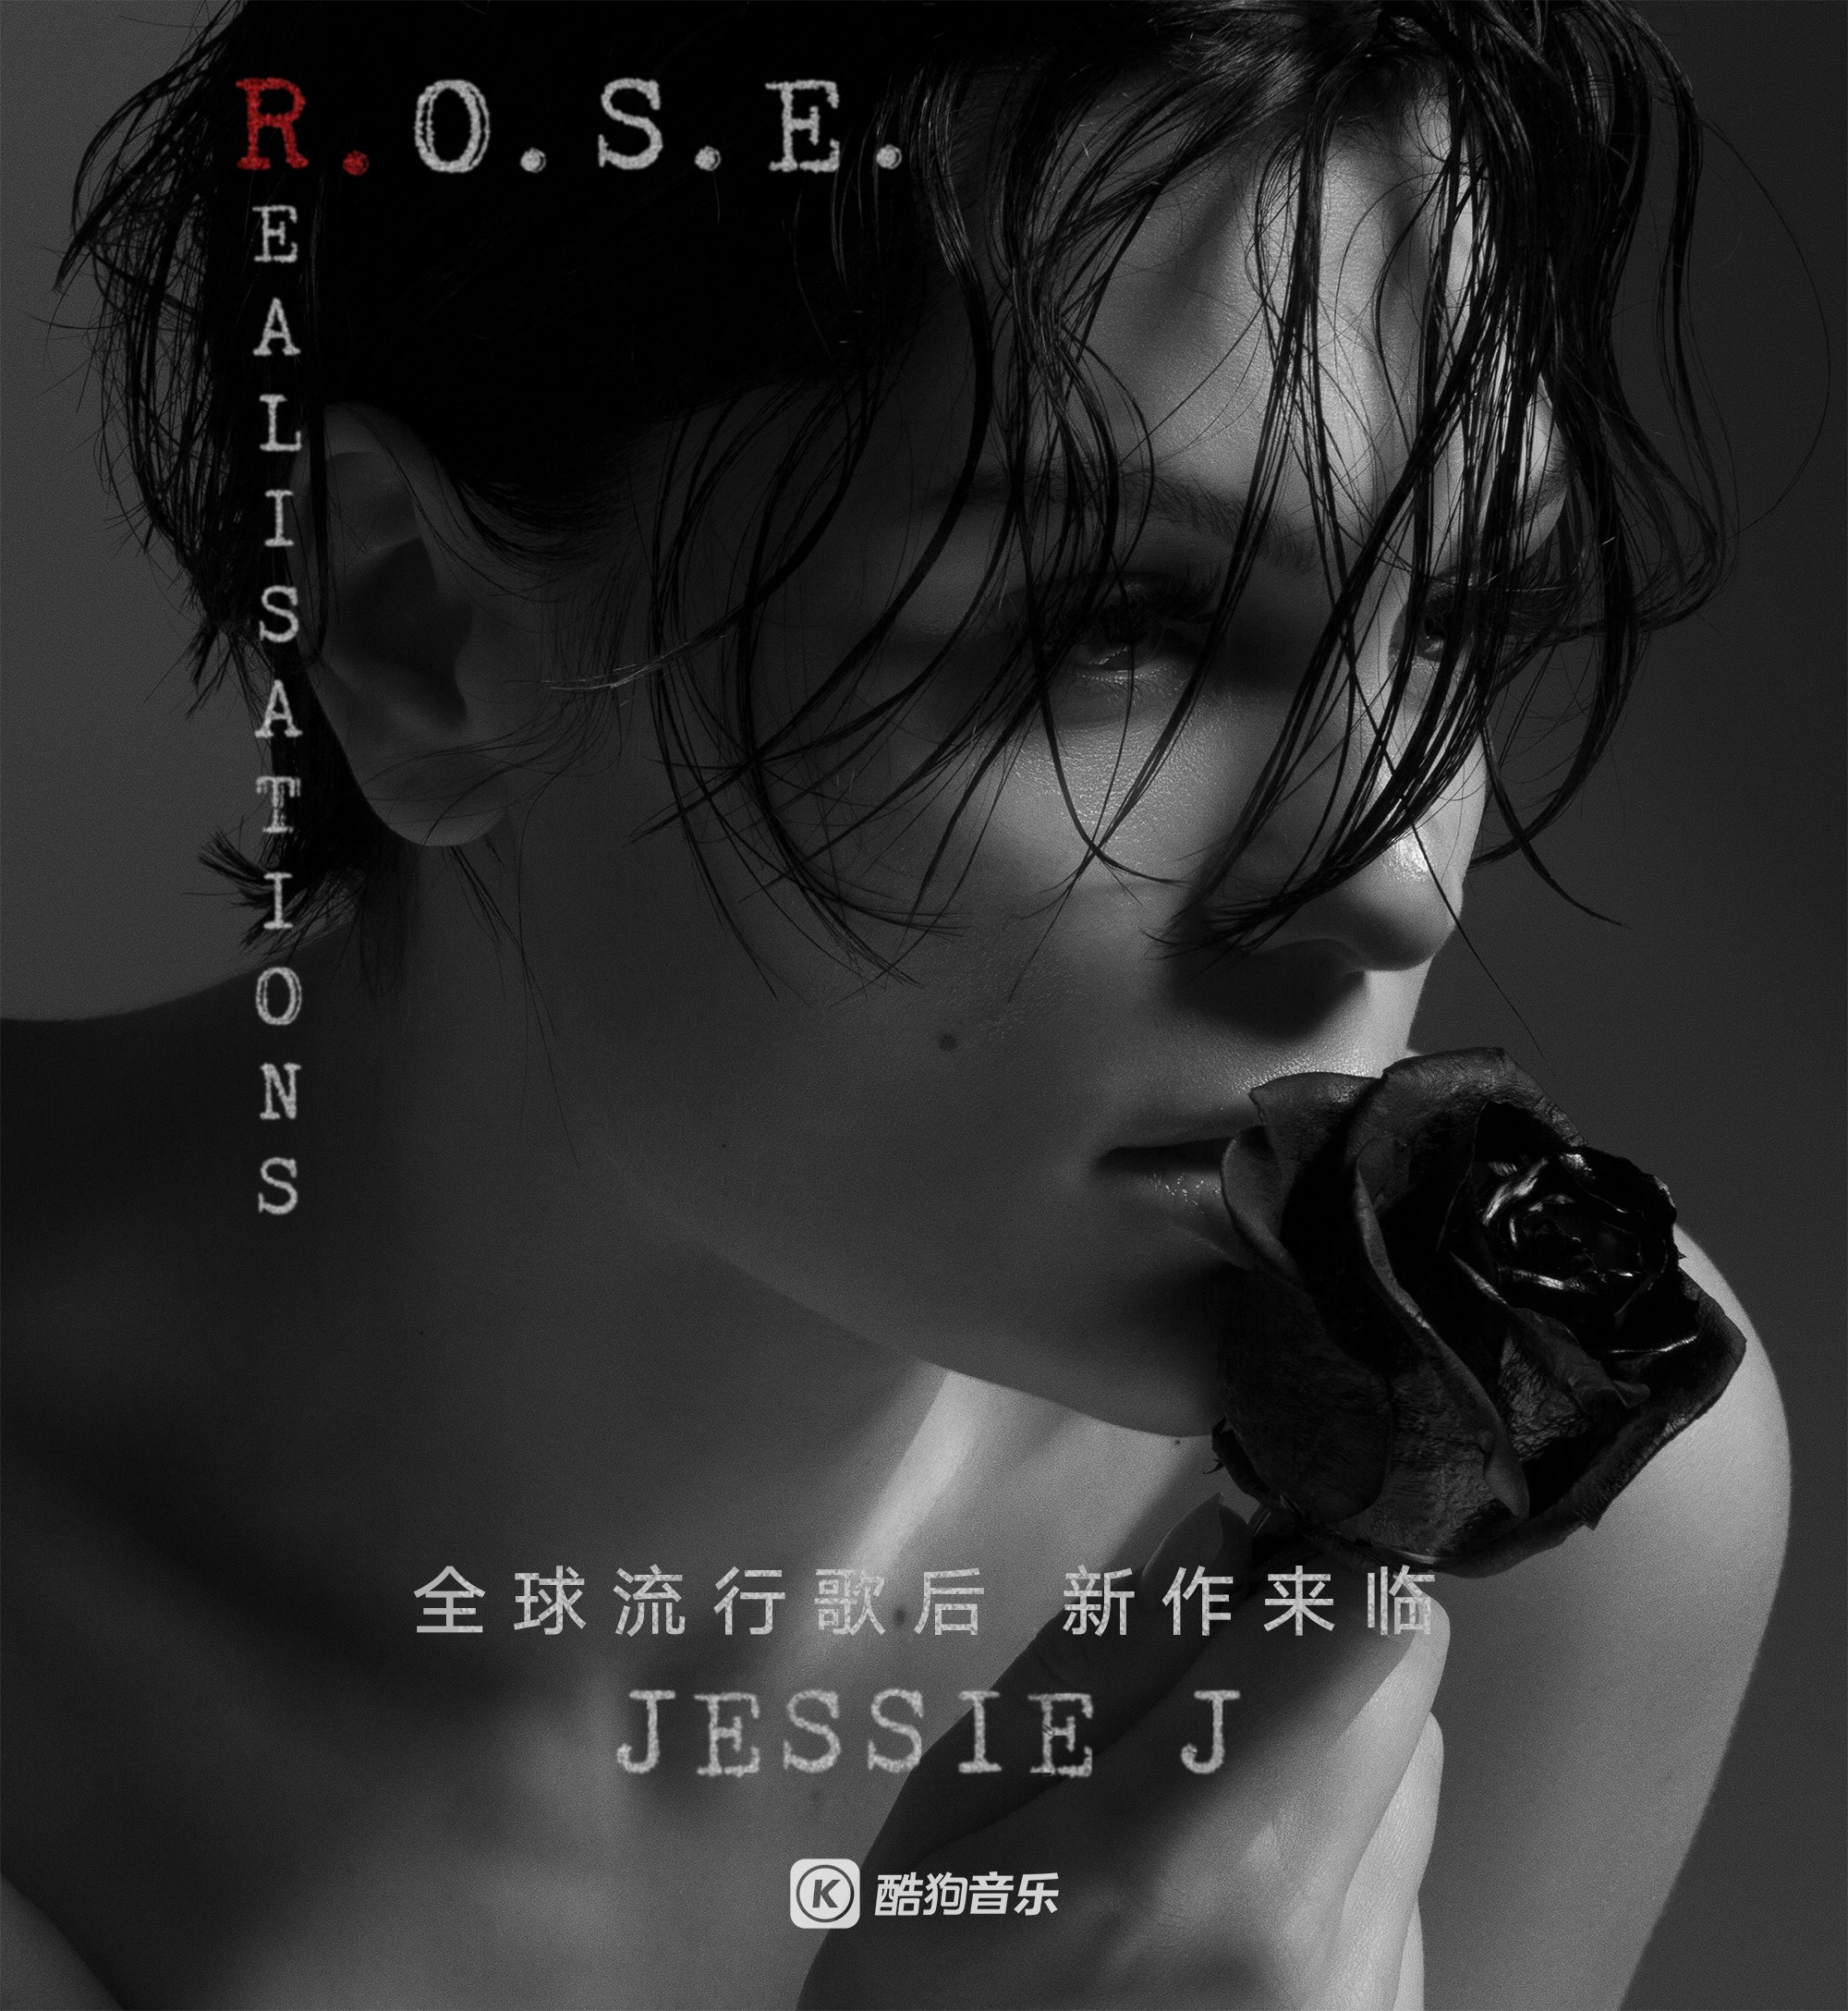 歌手夺冠后Jessie J再出新作 EP《Realisations》首发